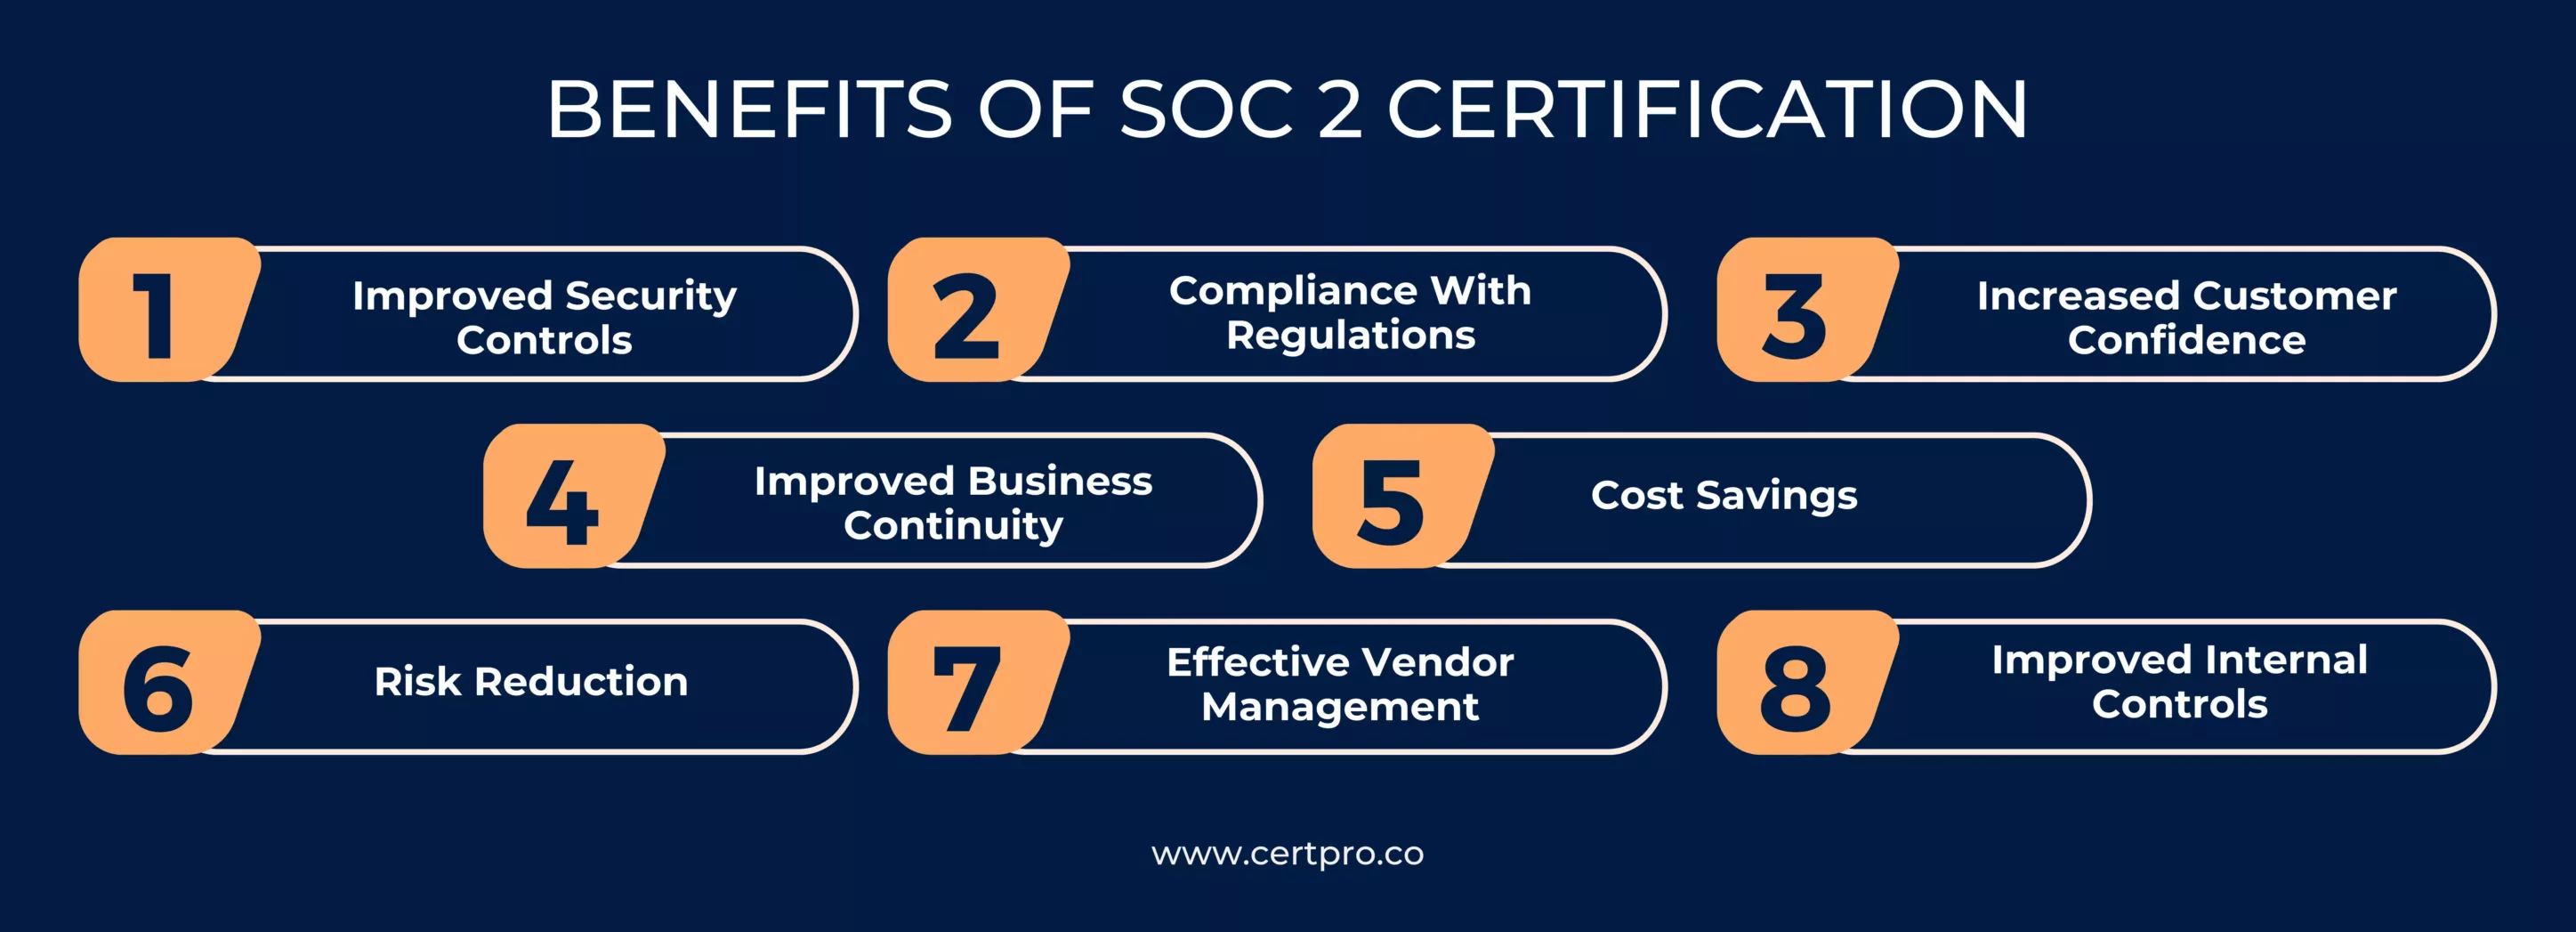 Benefits of SOC 2 certification